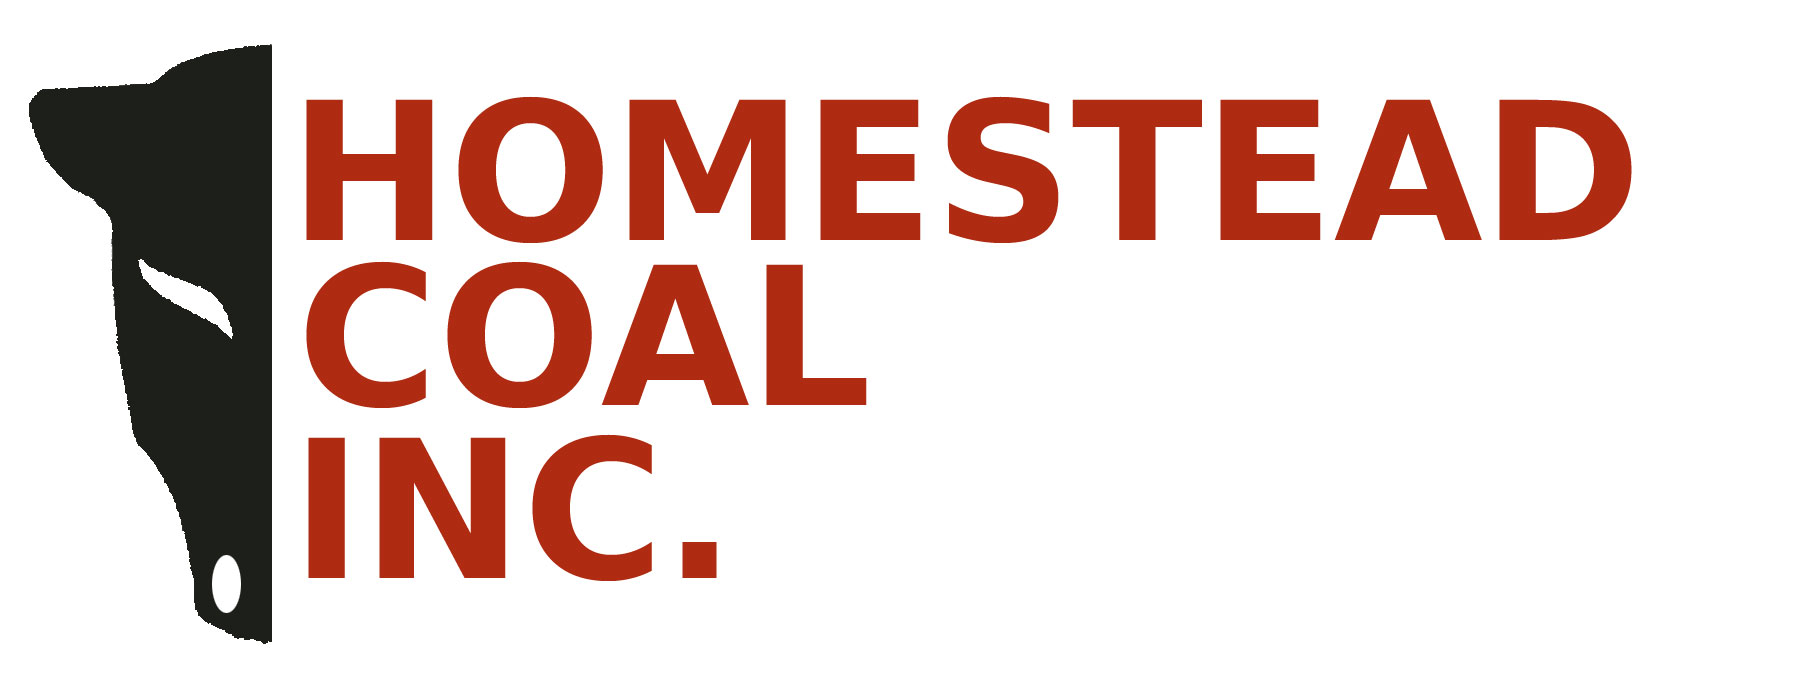 Homestead Coal, Inc